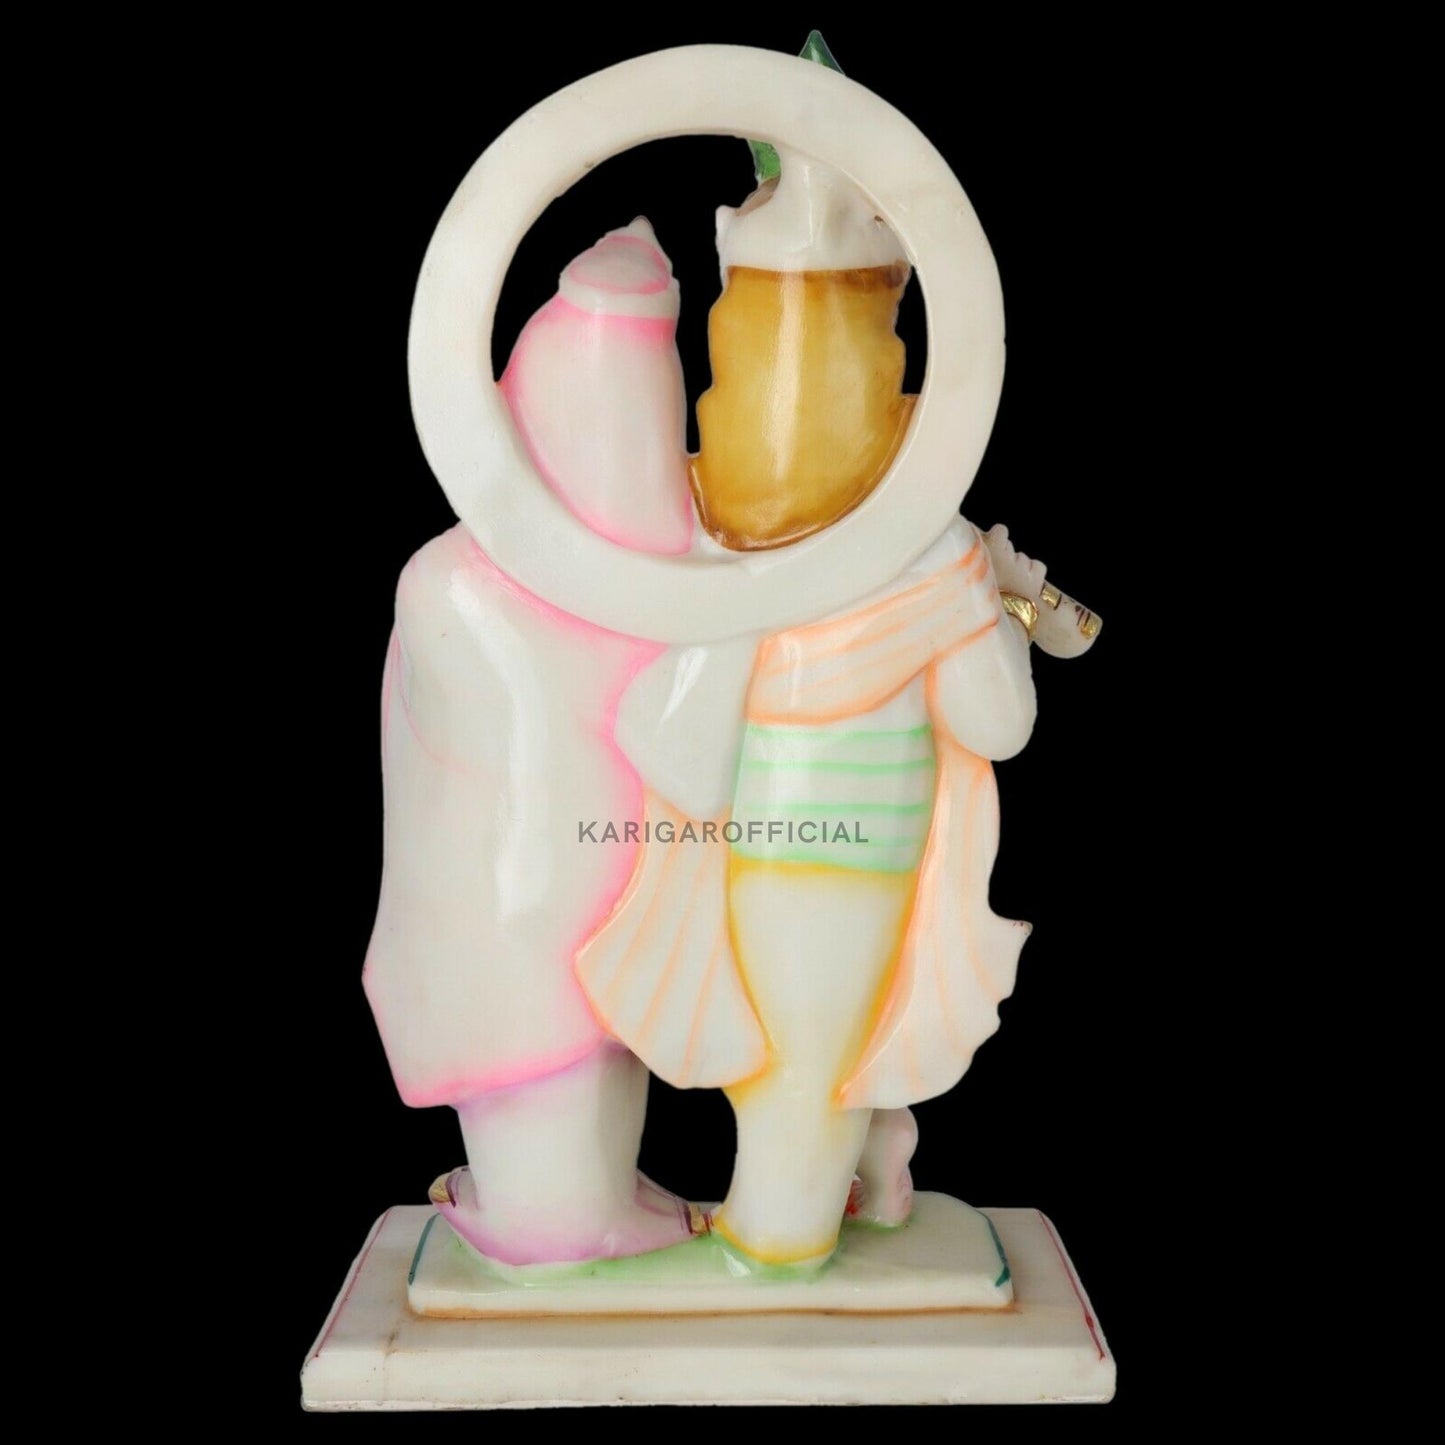 Radha Krishna Statue, Gold Leaf Work Figurine, Large 18 inches Marble Radha Krishna idol, Hindu Divine Couple Handpainted Murti, Home Temple Pooja Decoration, Wedding Housewarming Gifts Sculpture